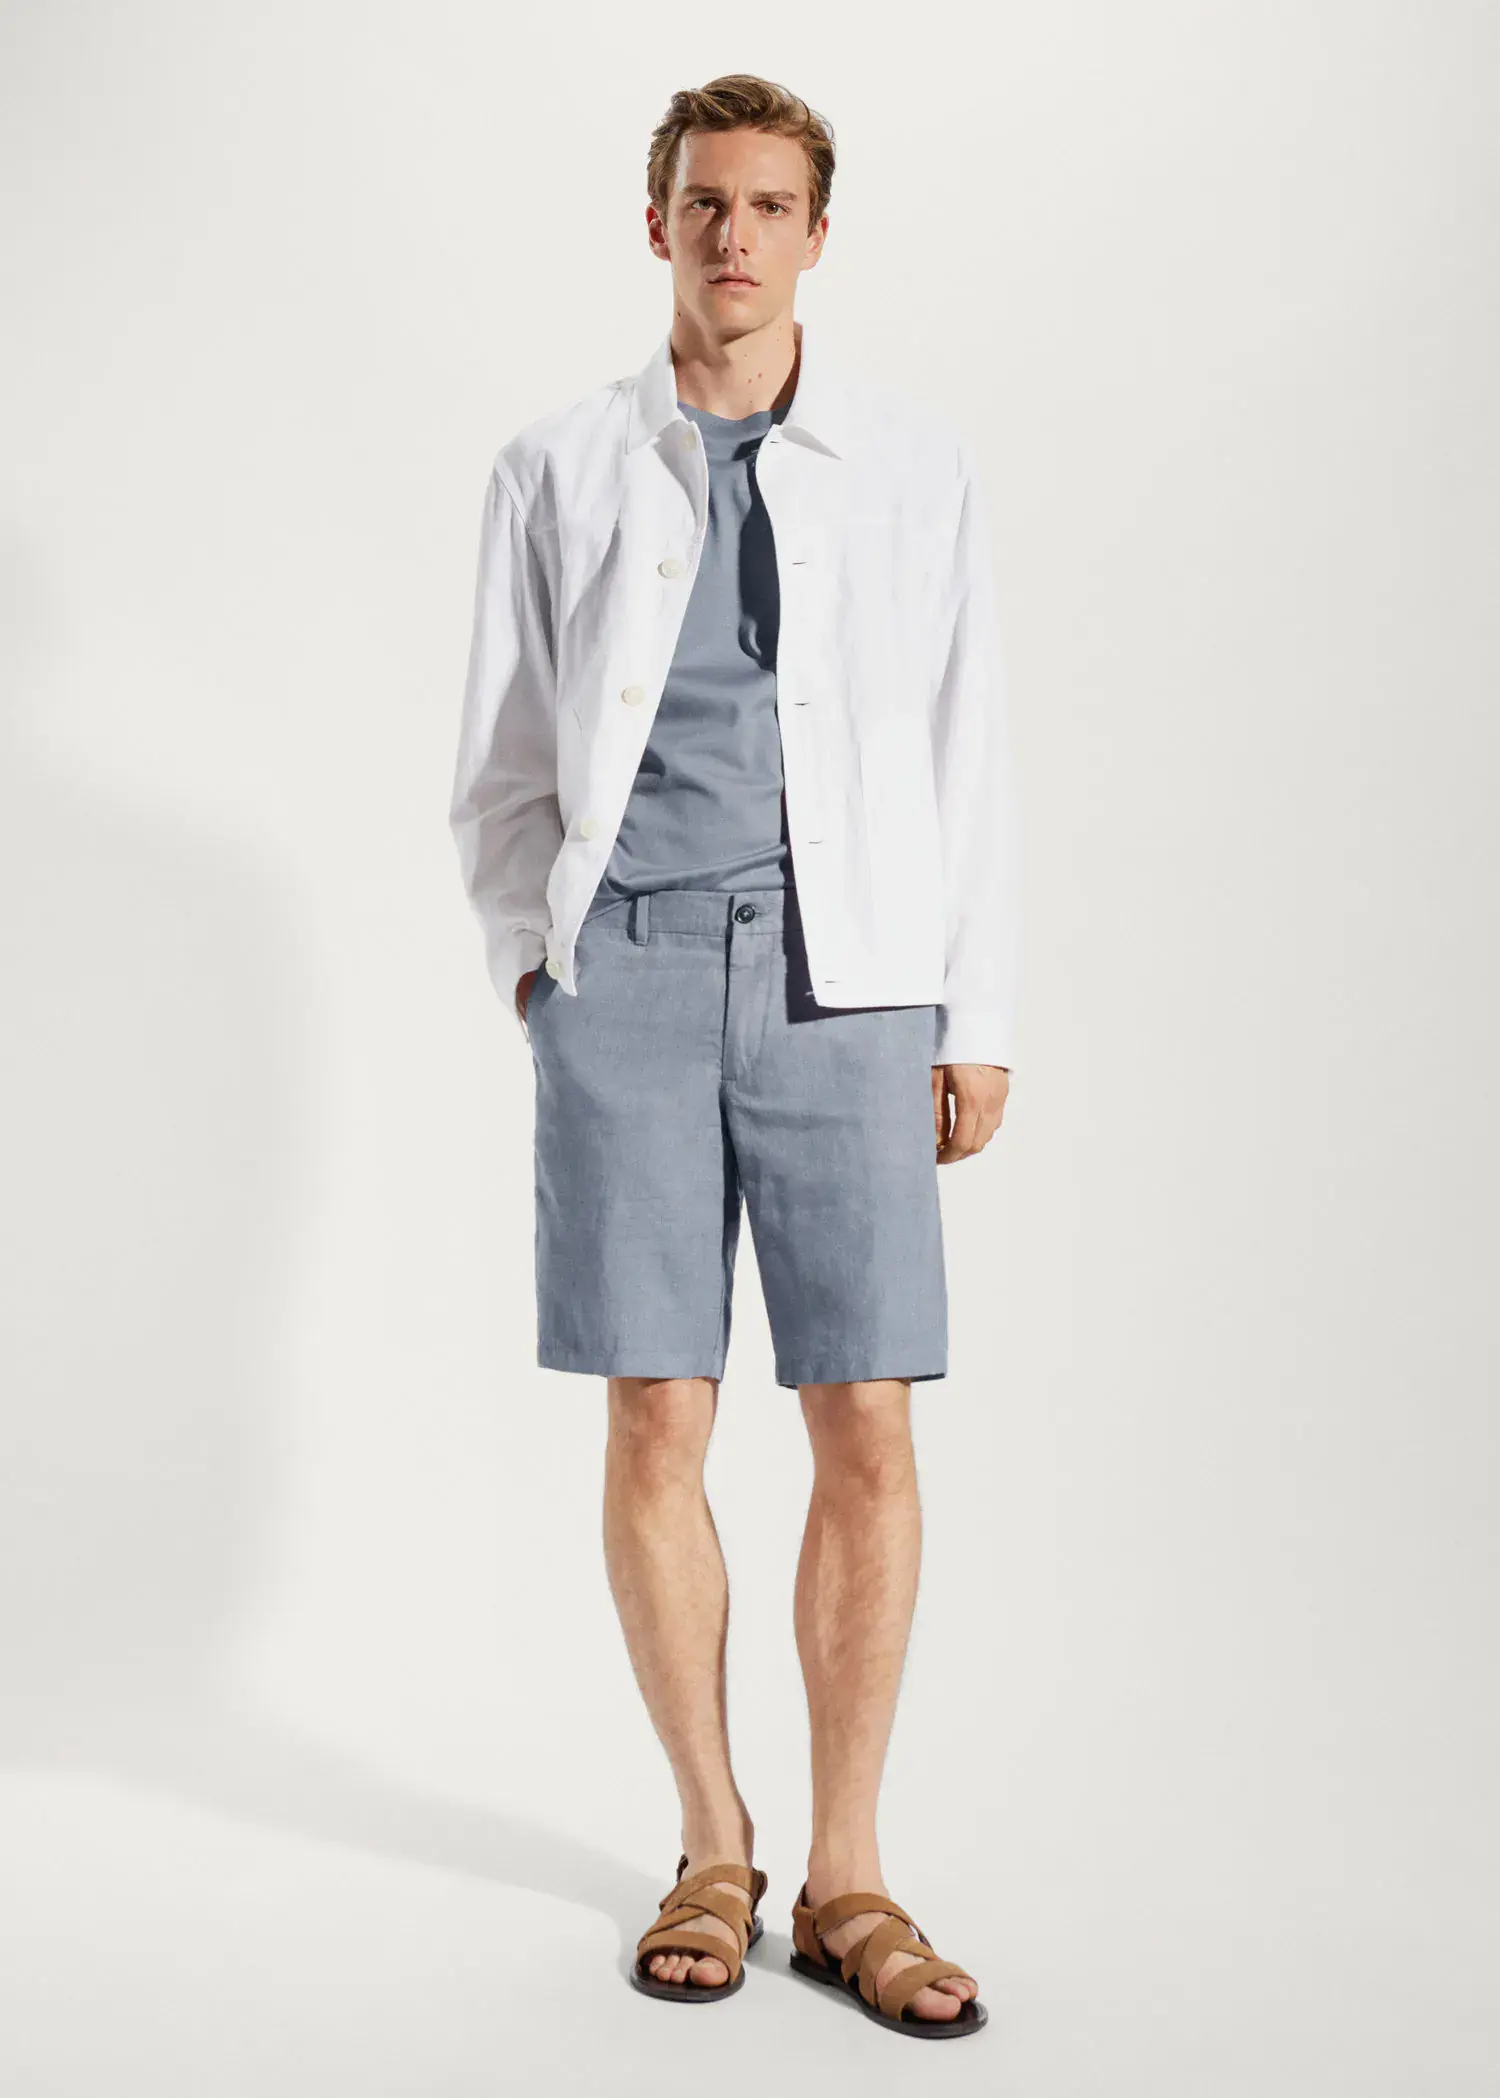 Mango 100% linen shorts. a man in a white shirt and blue shorts. 